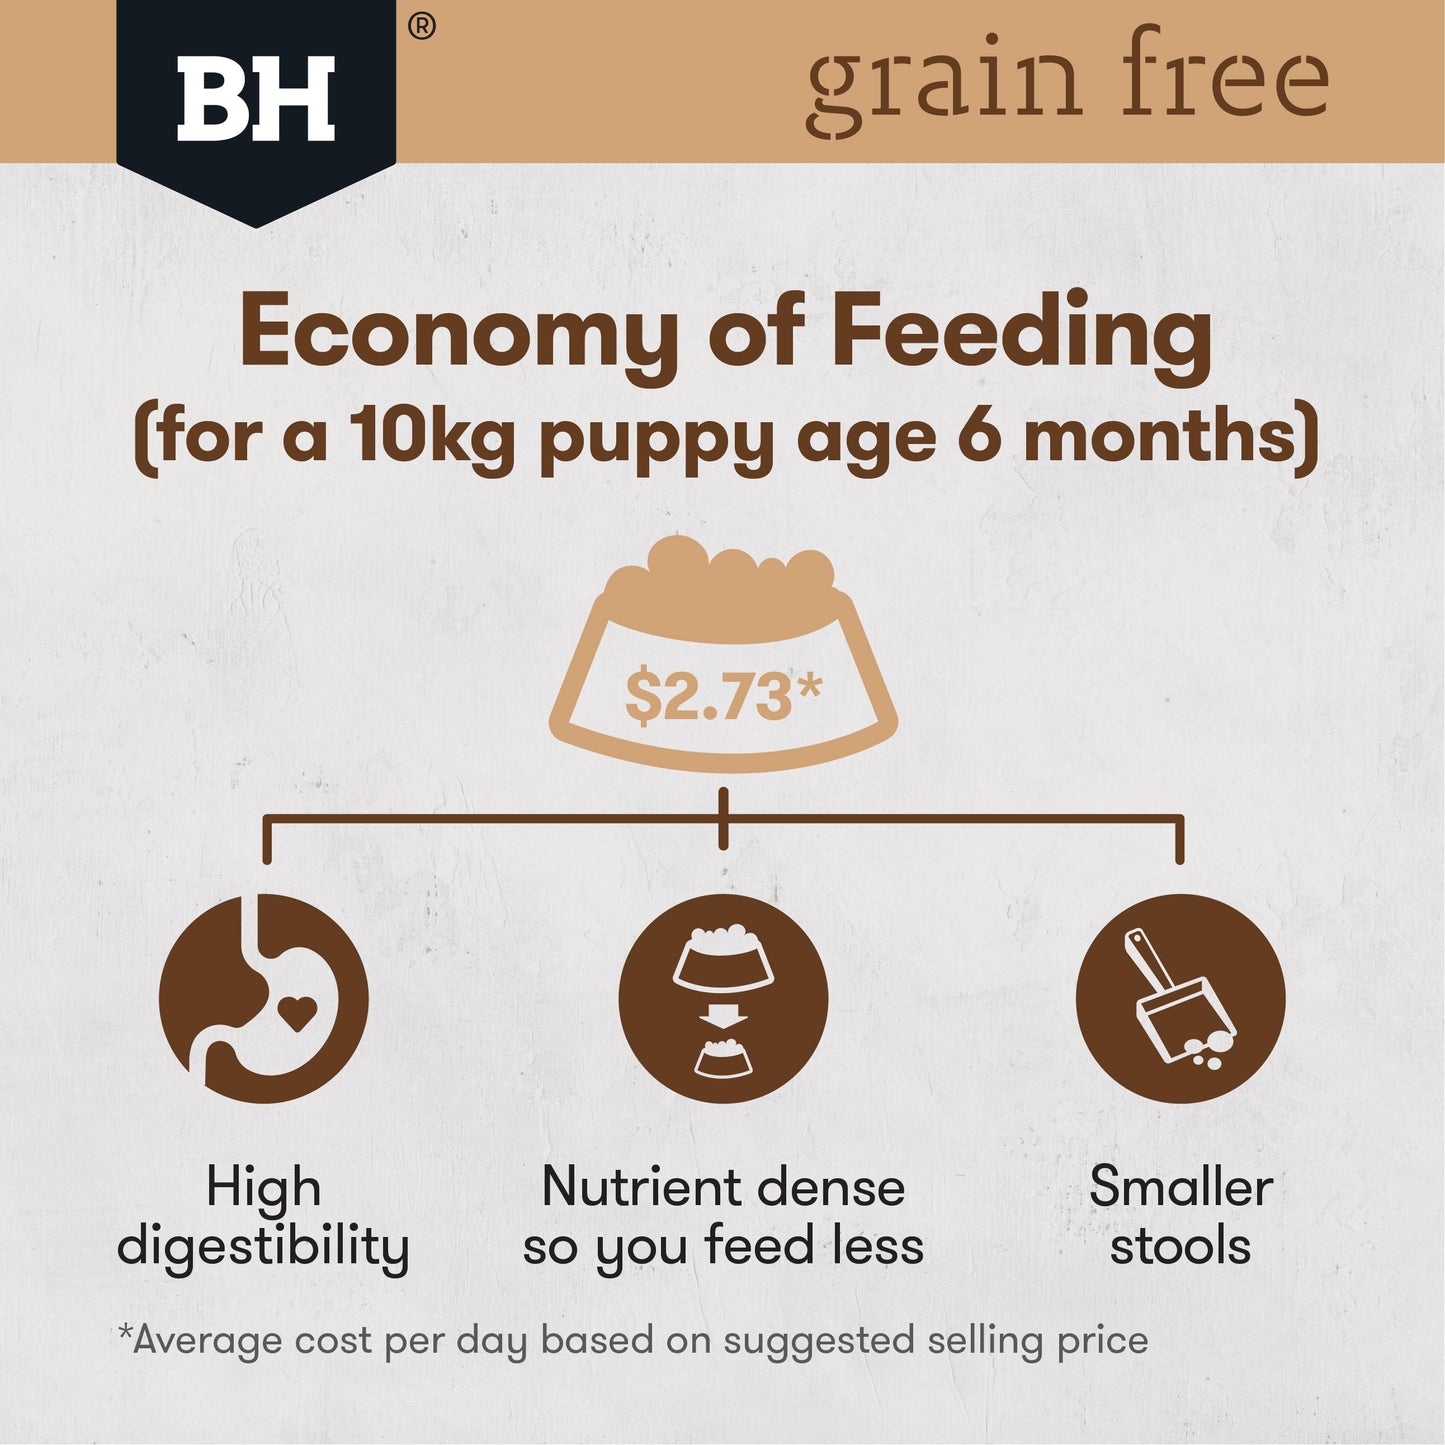 Black Hawk Grain Free Ocean Fish Dry Puppy Food